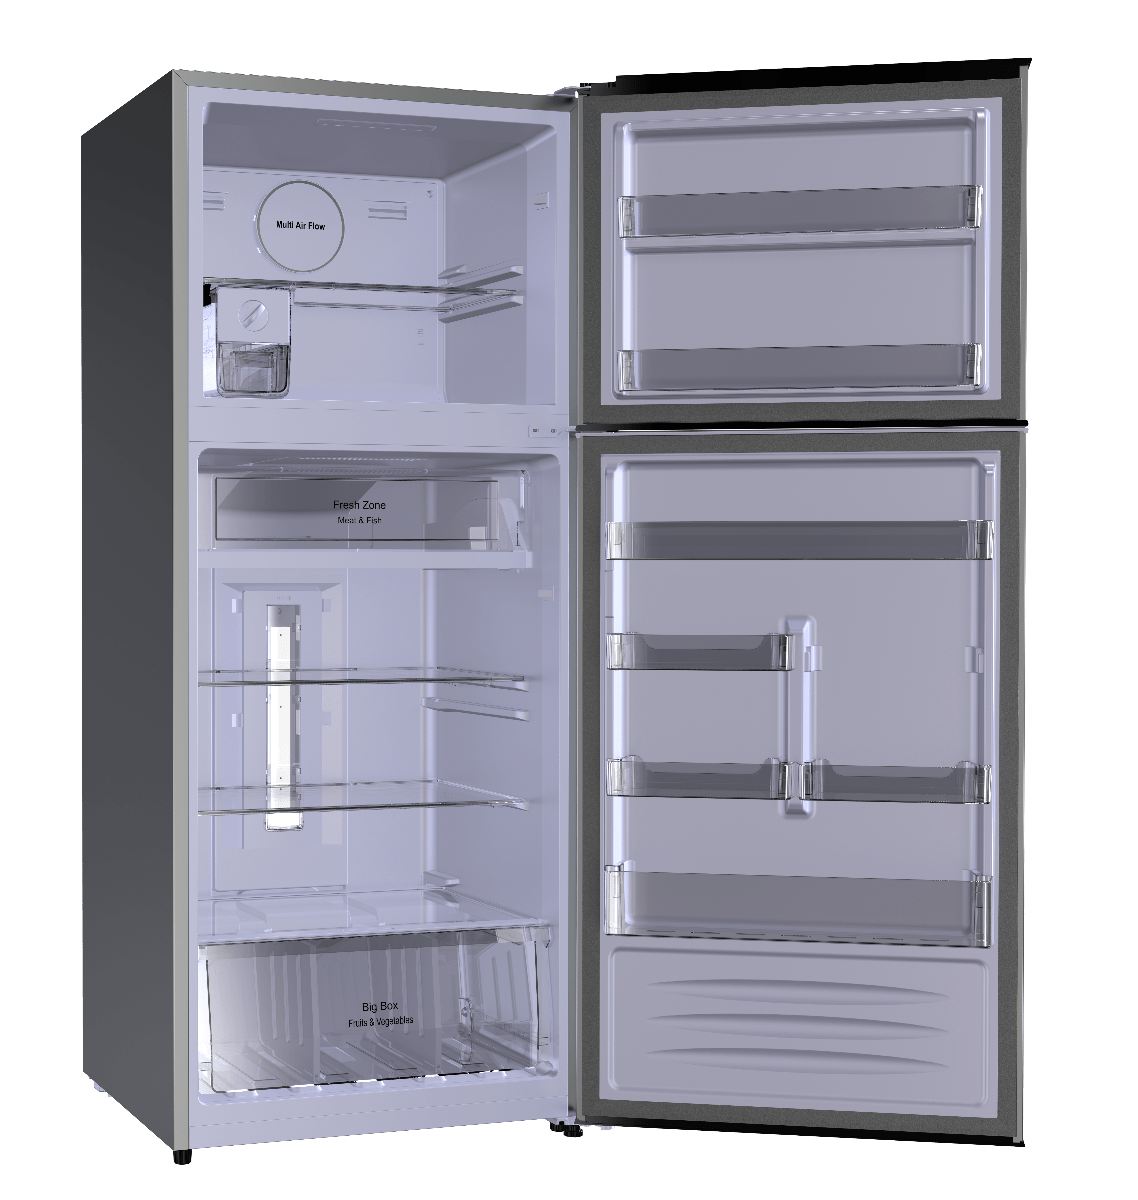 Fresh Refrigerator 426 Liters - Stainless Steel /FNT-M540 YT